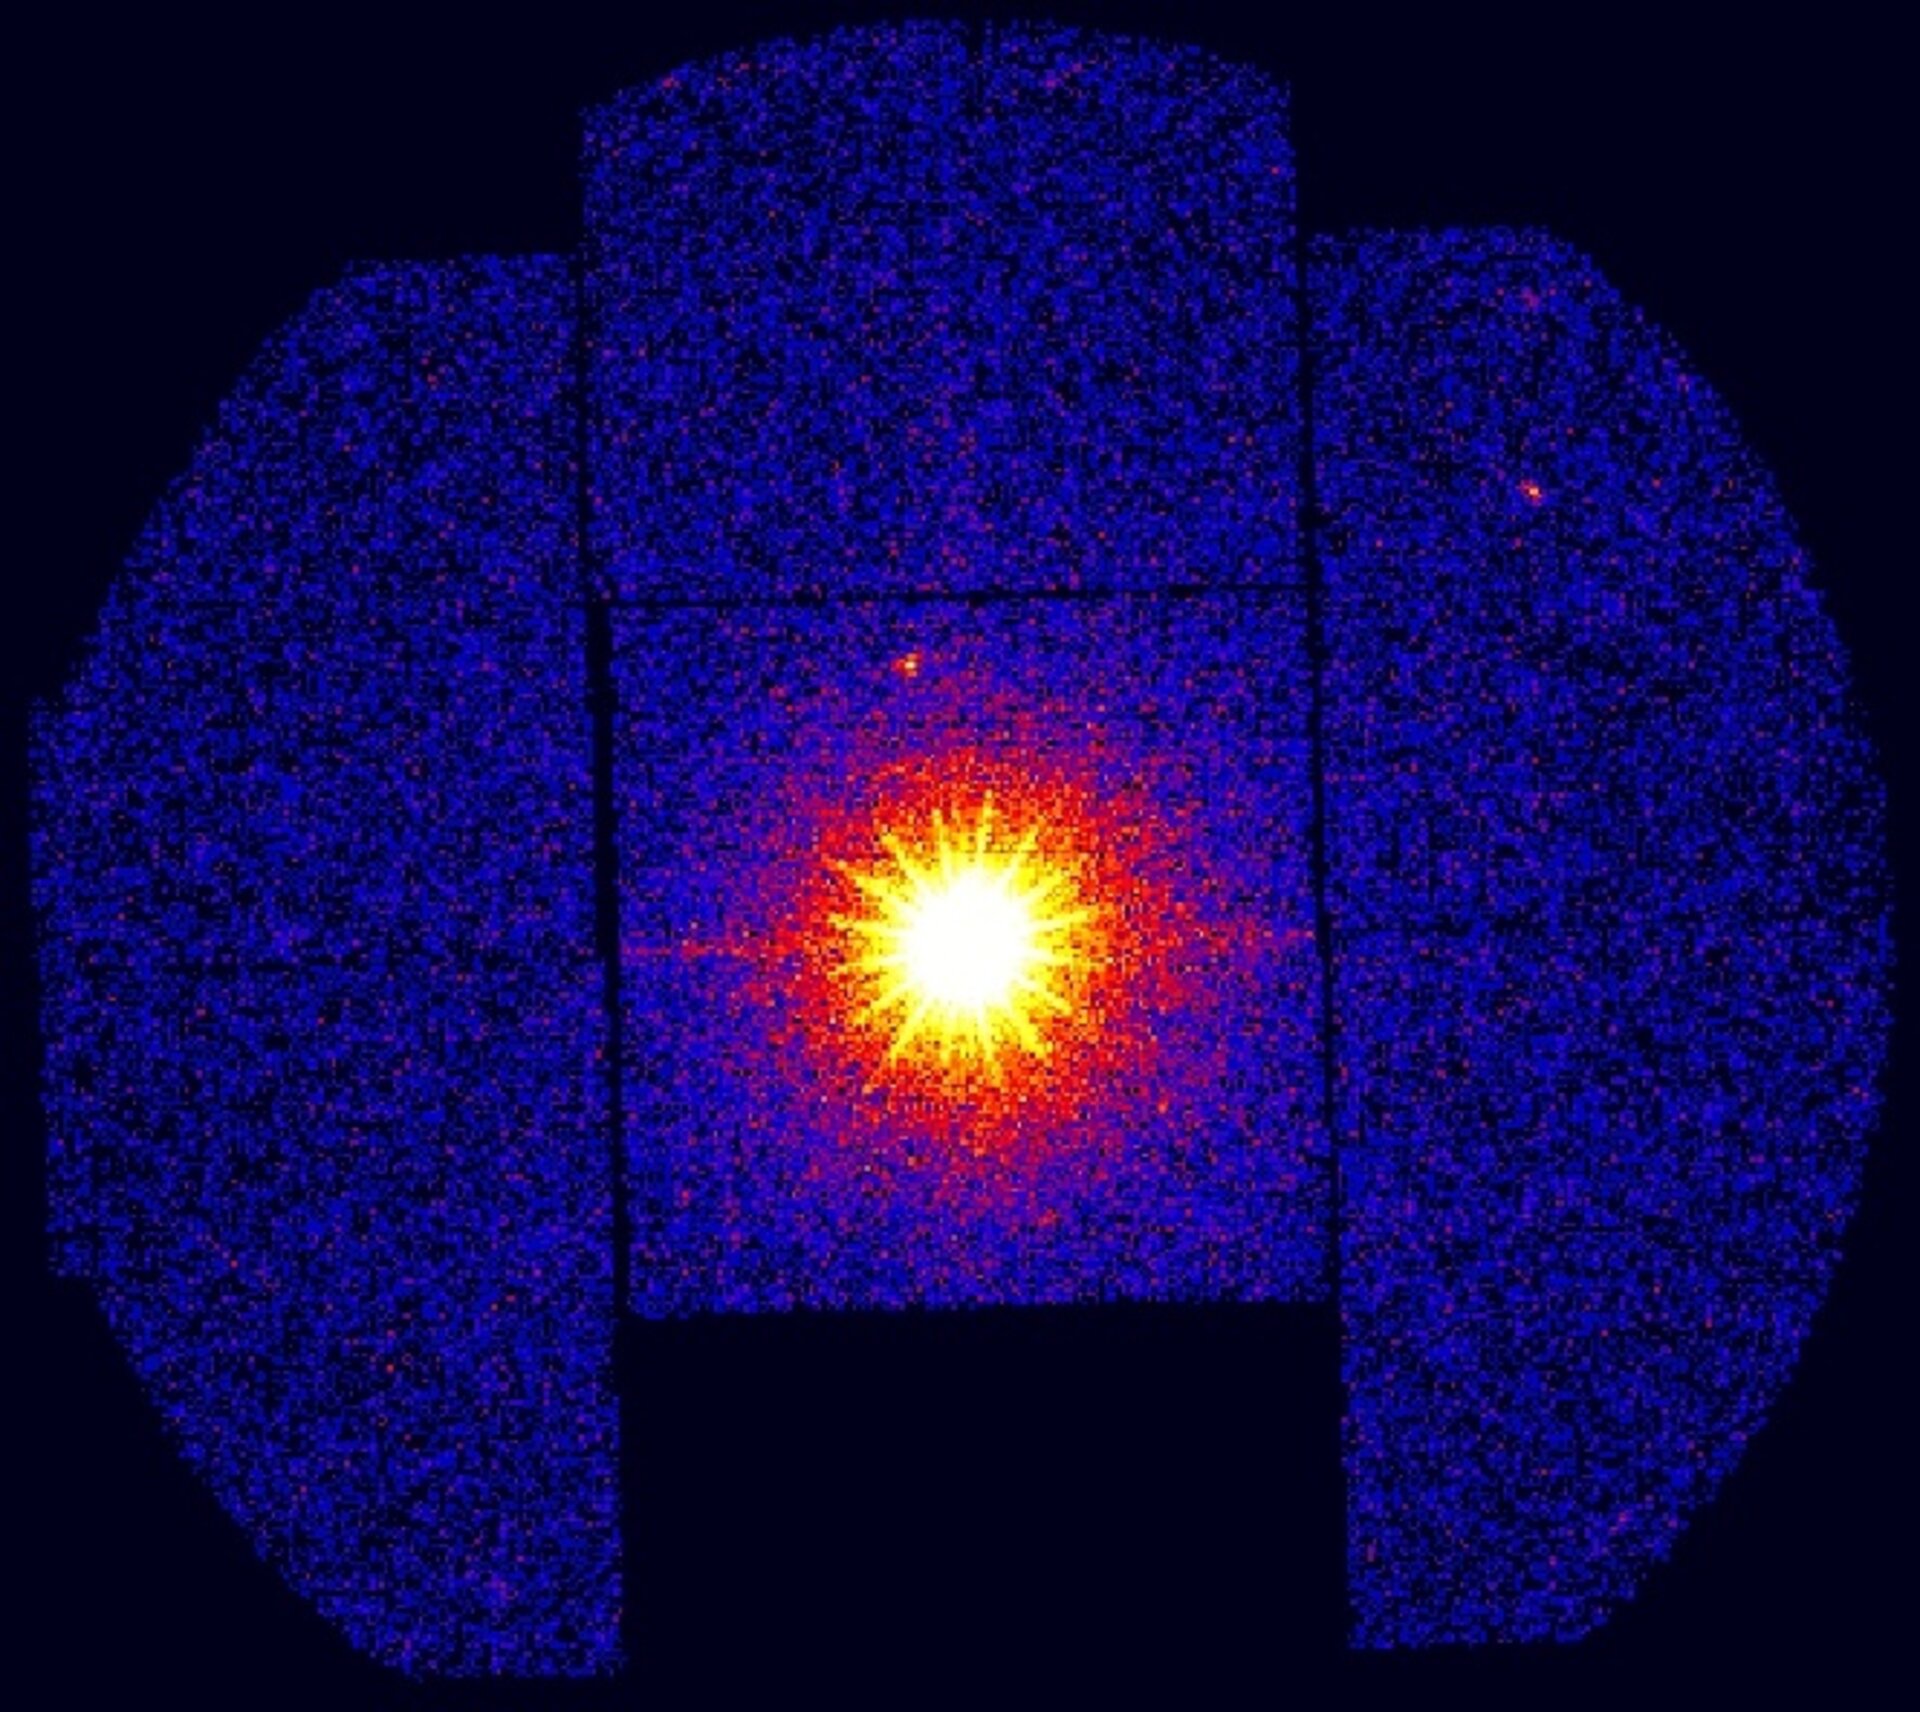 XMM-Newton’s image of X-ray nova IGR J17497-2821